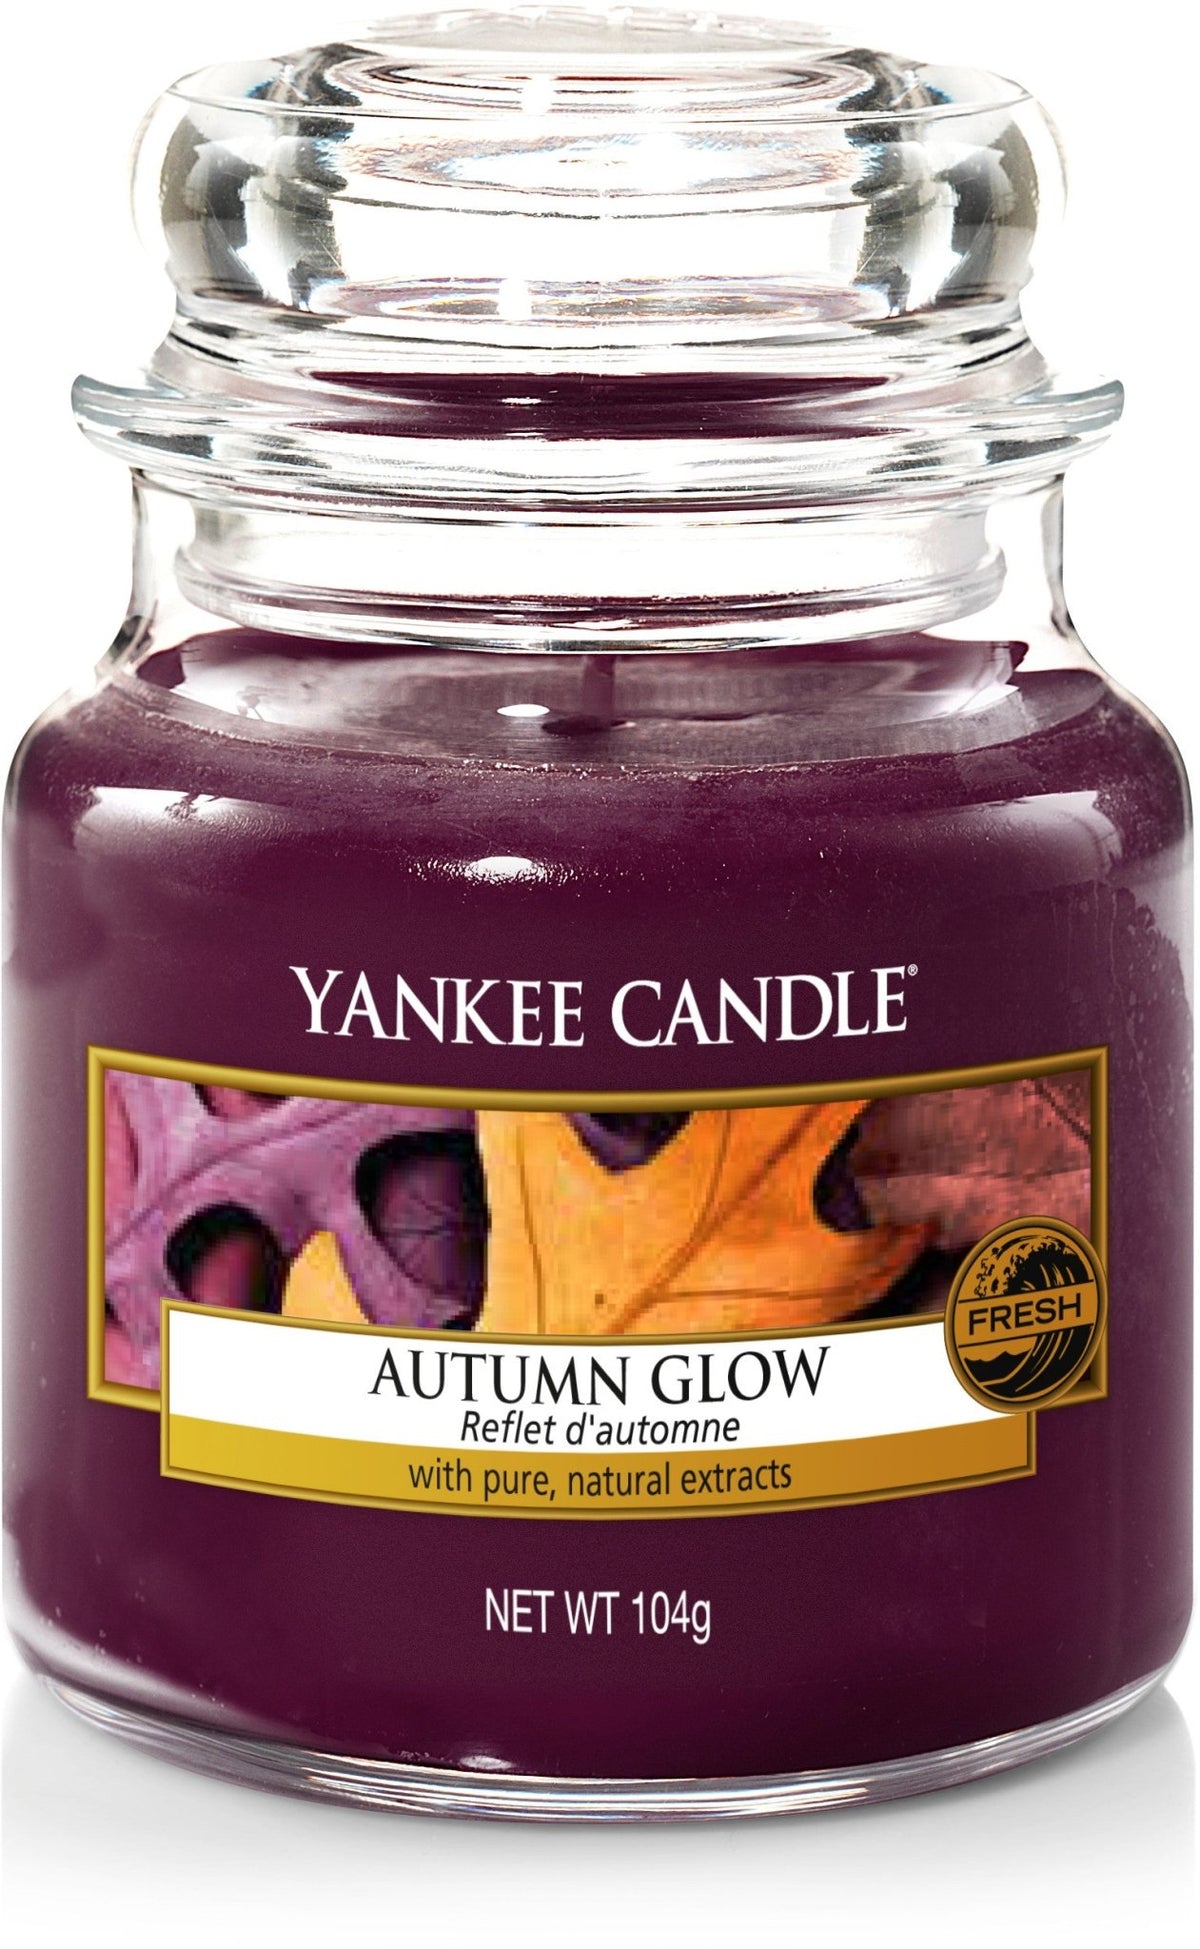 Yankee Candle Autumn Glow 104G - AllurebeautypkYankee Candle Autumn Glow 104G